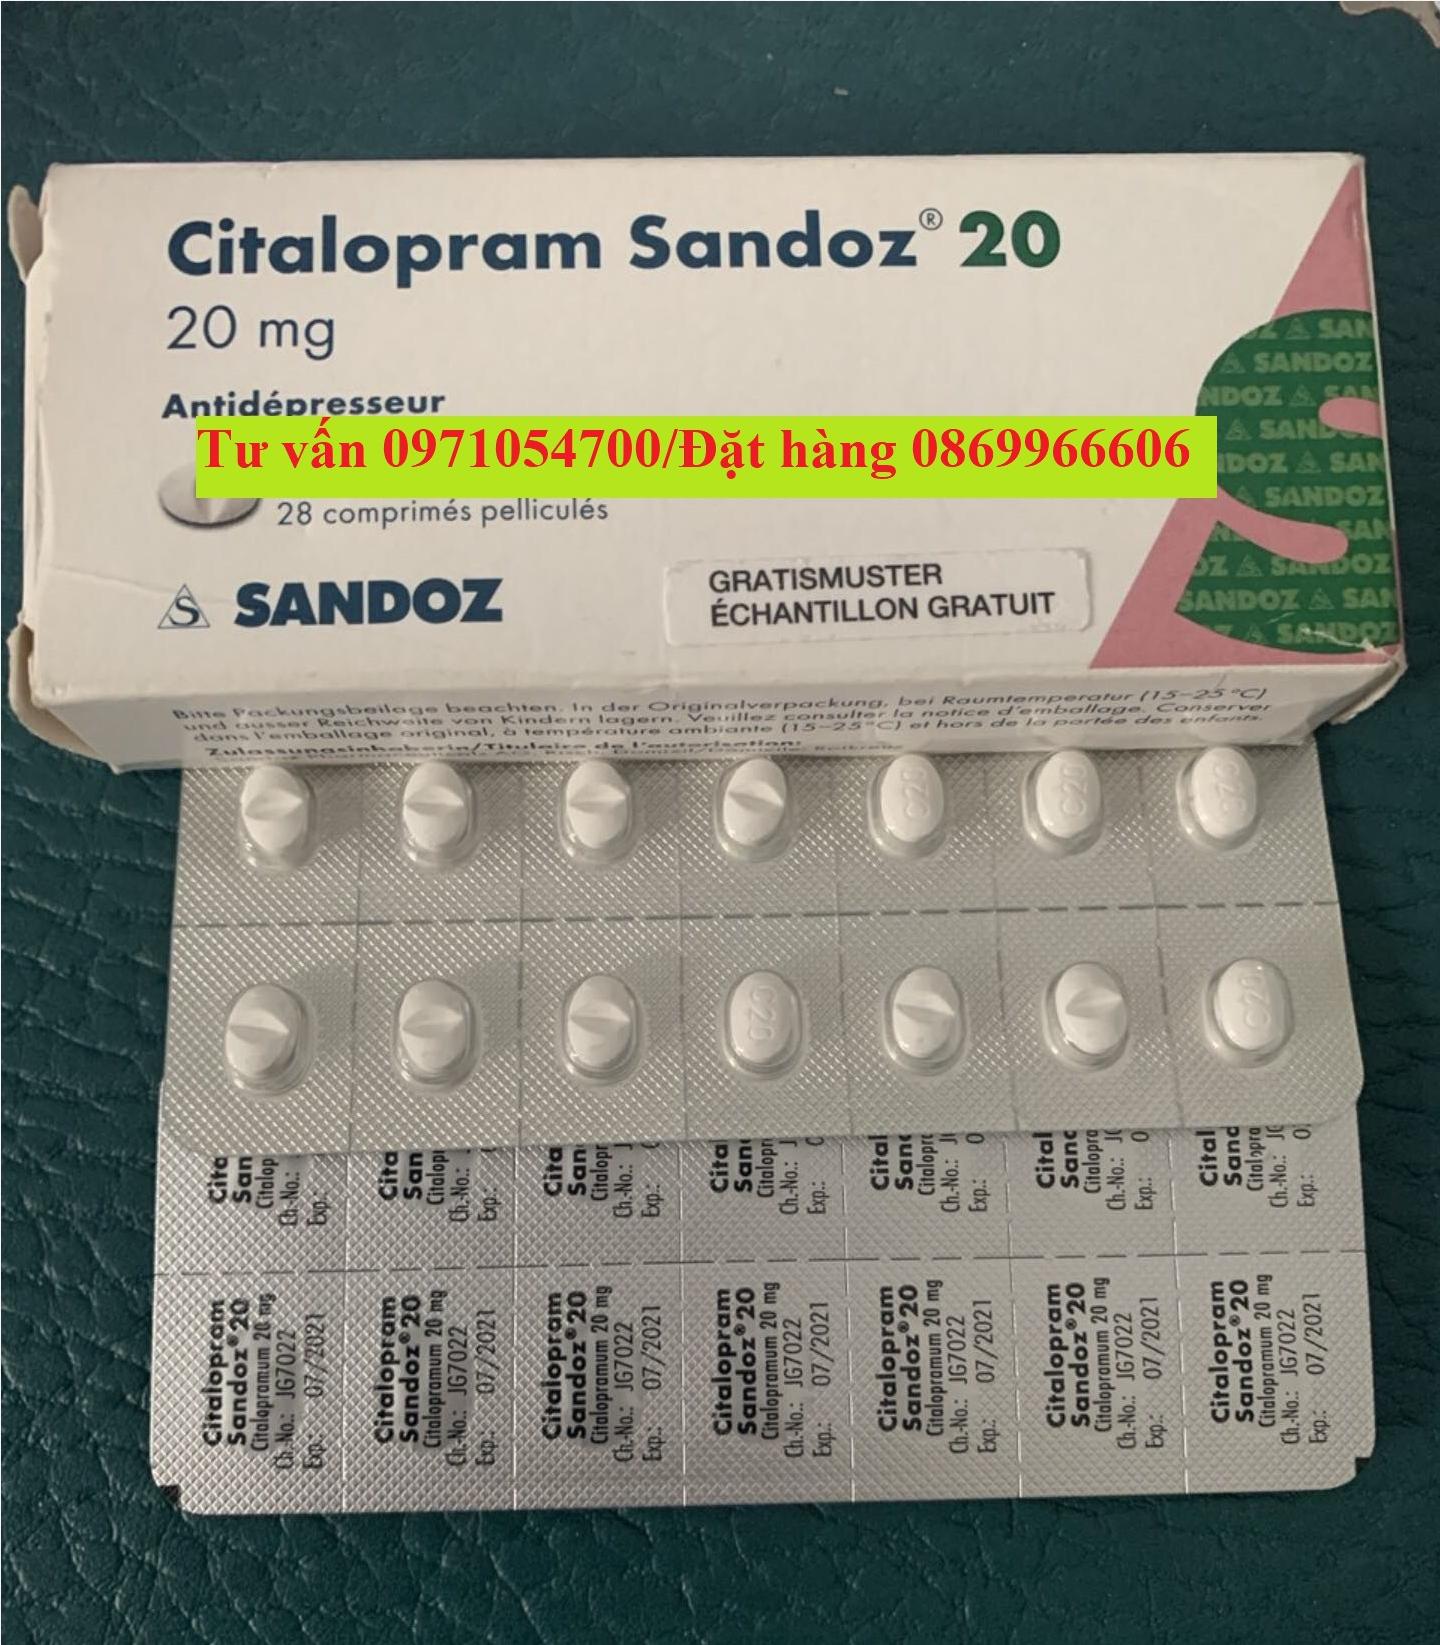  Thuốc Citalopram Sandoz 20 giá bao nhiêu mua ở đâu?